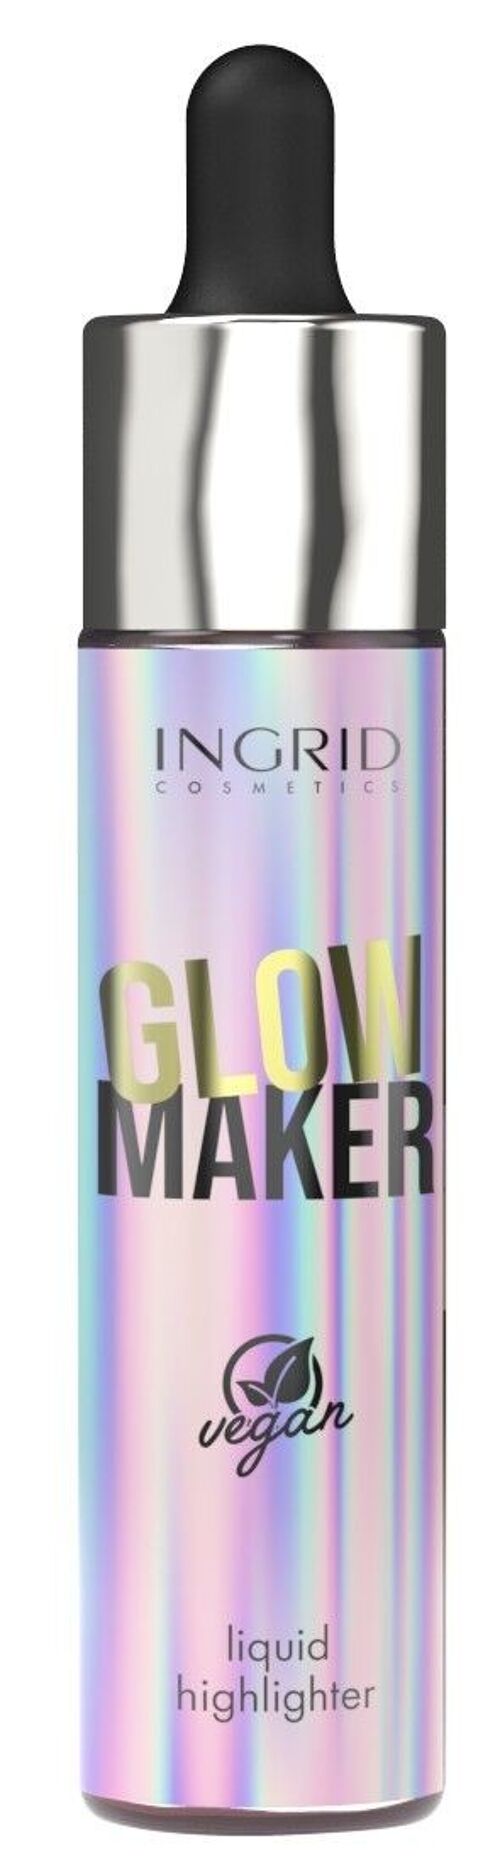 Highlighter liquide Glow Effect 01 - 20 ml - Ingrid Cosmetics